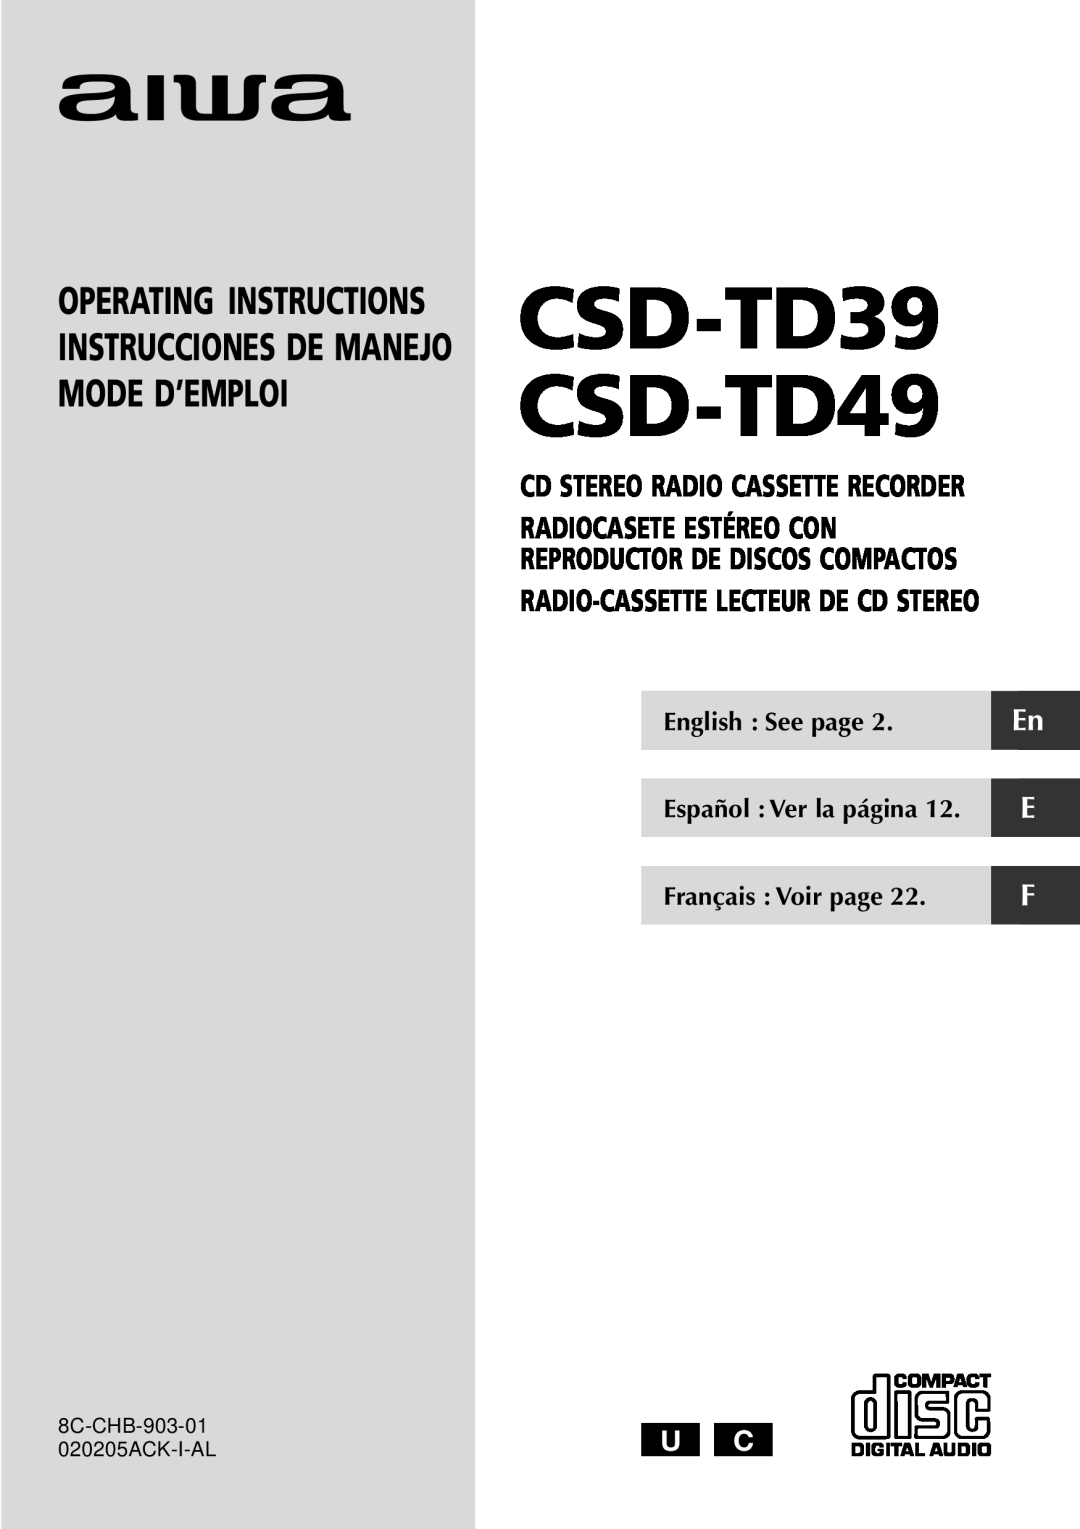 Aiwa CSD-TD39, CSD-TD49 operating instructions Radio-Cassettelecteur De Cd Stereo, English See page, Español Ver la página 